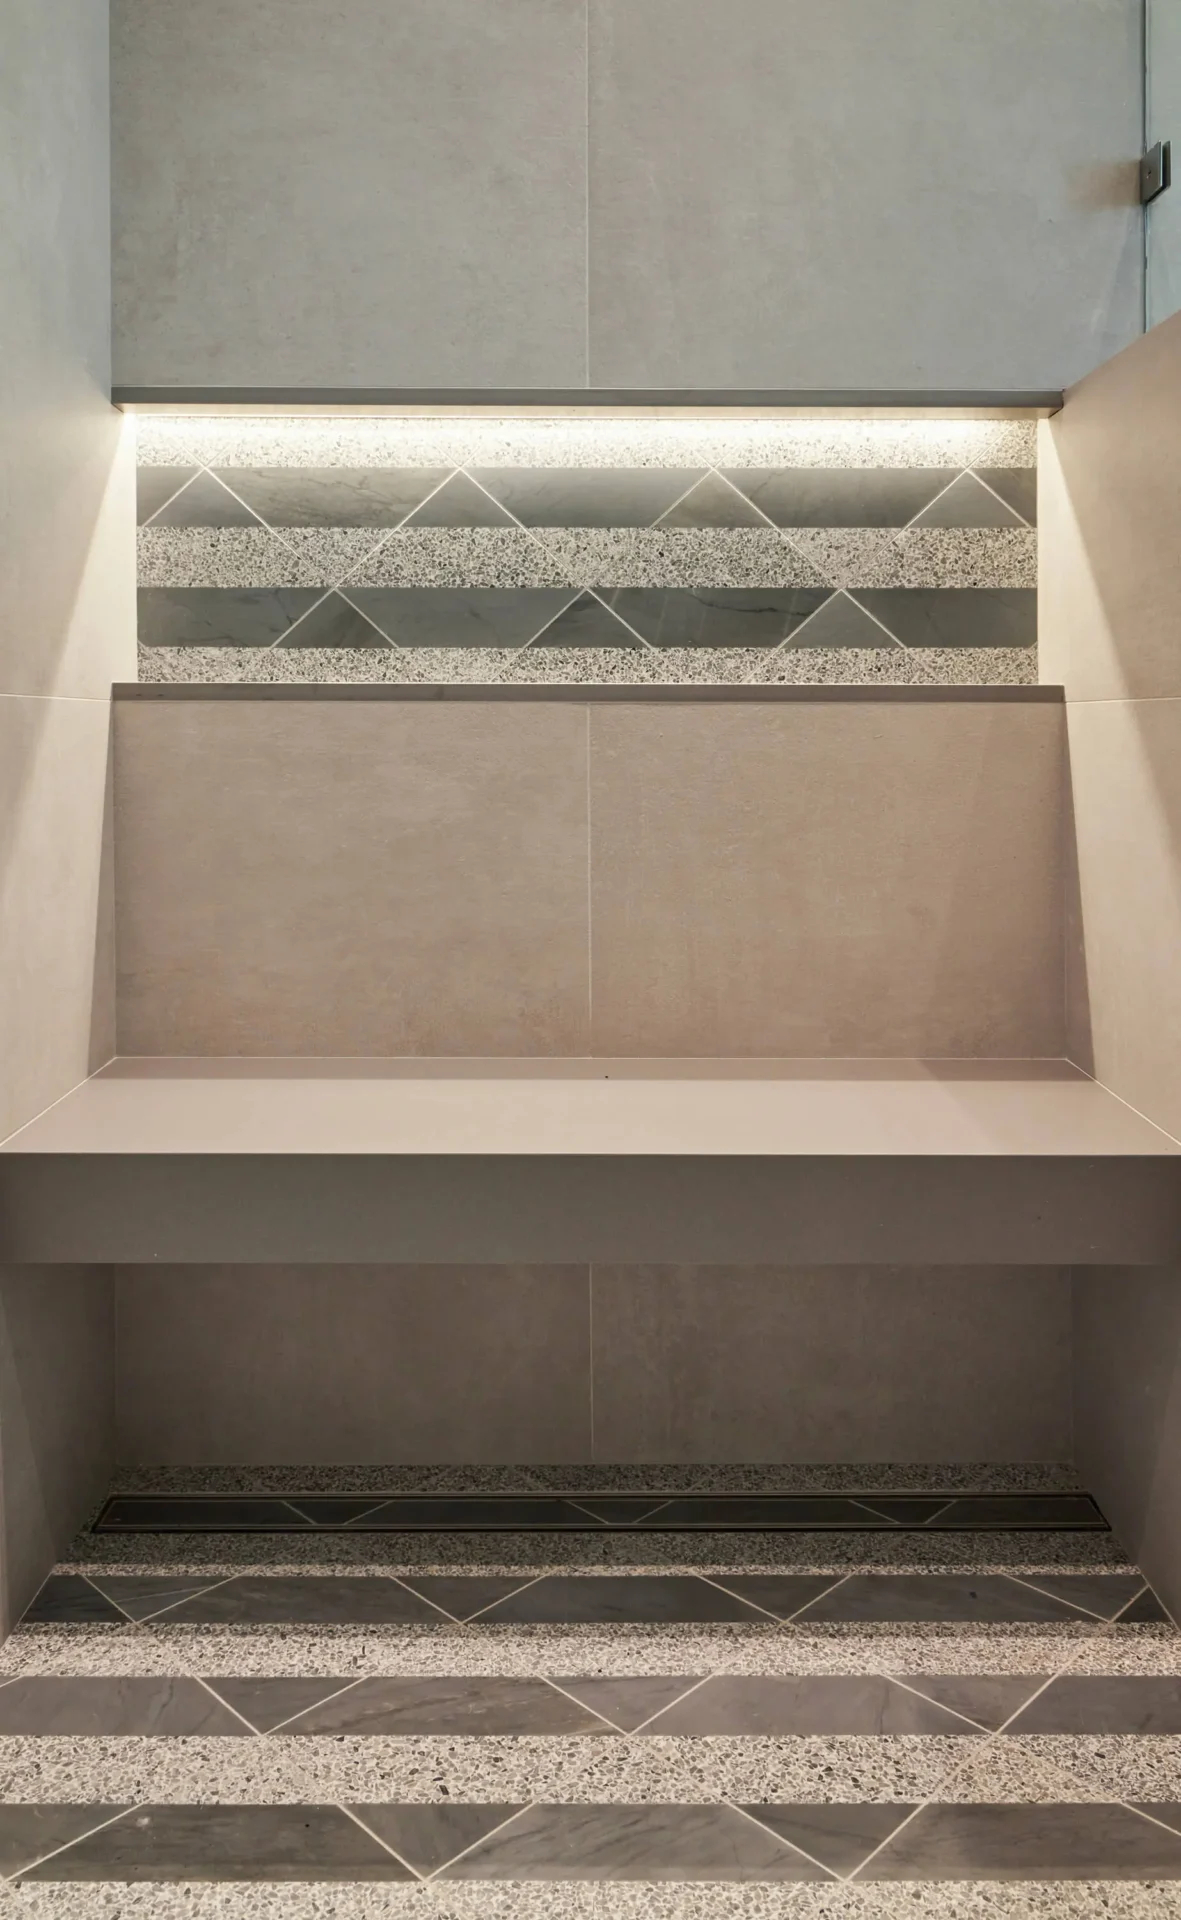 A bathroom with a tiled wall and a shelf